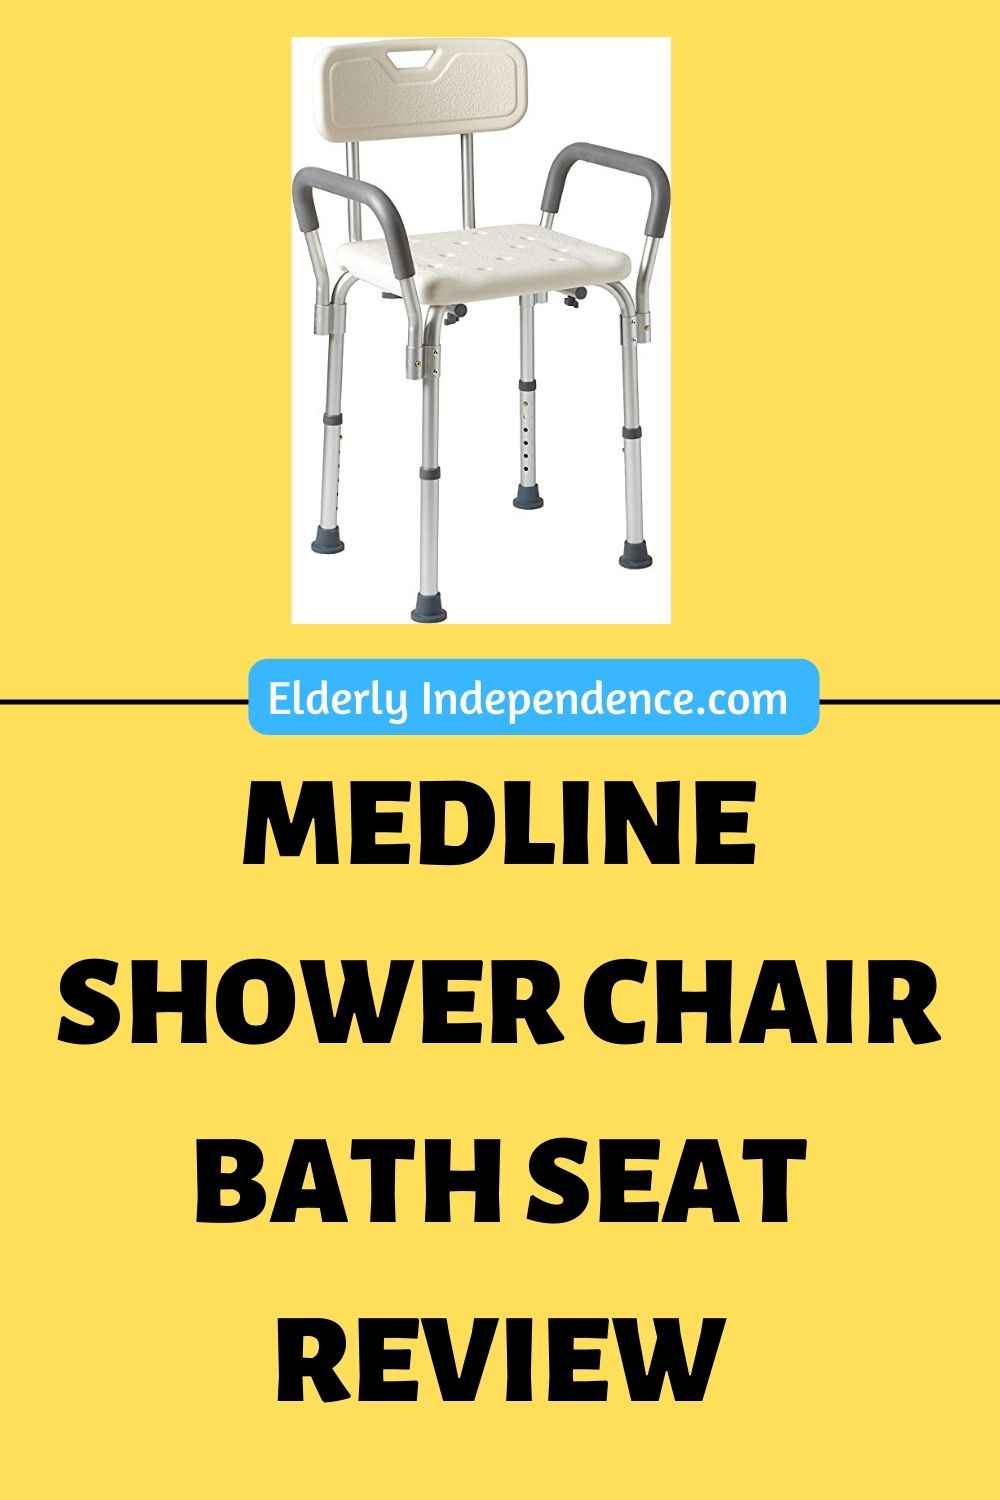 Medline Shower Chair Image